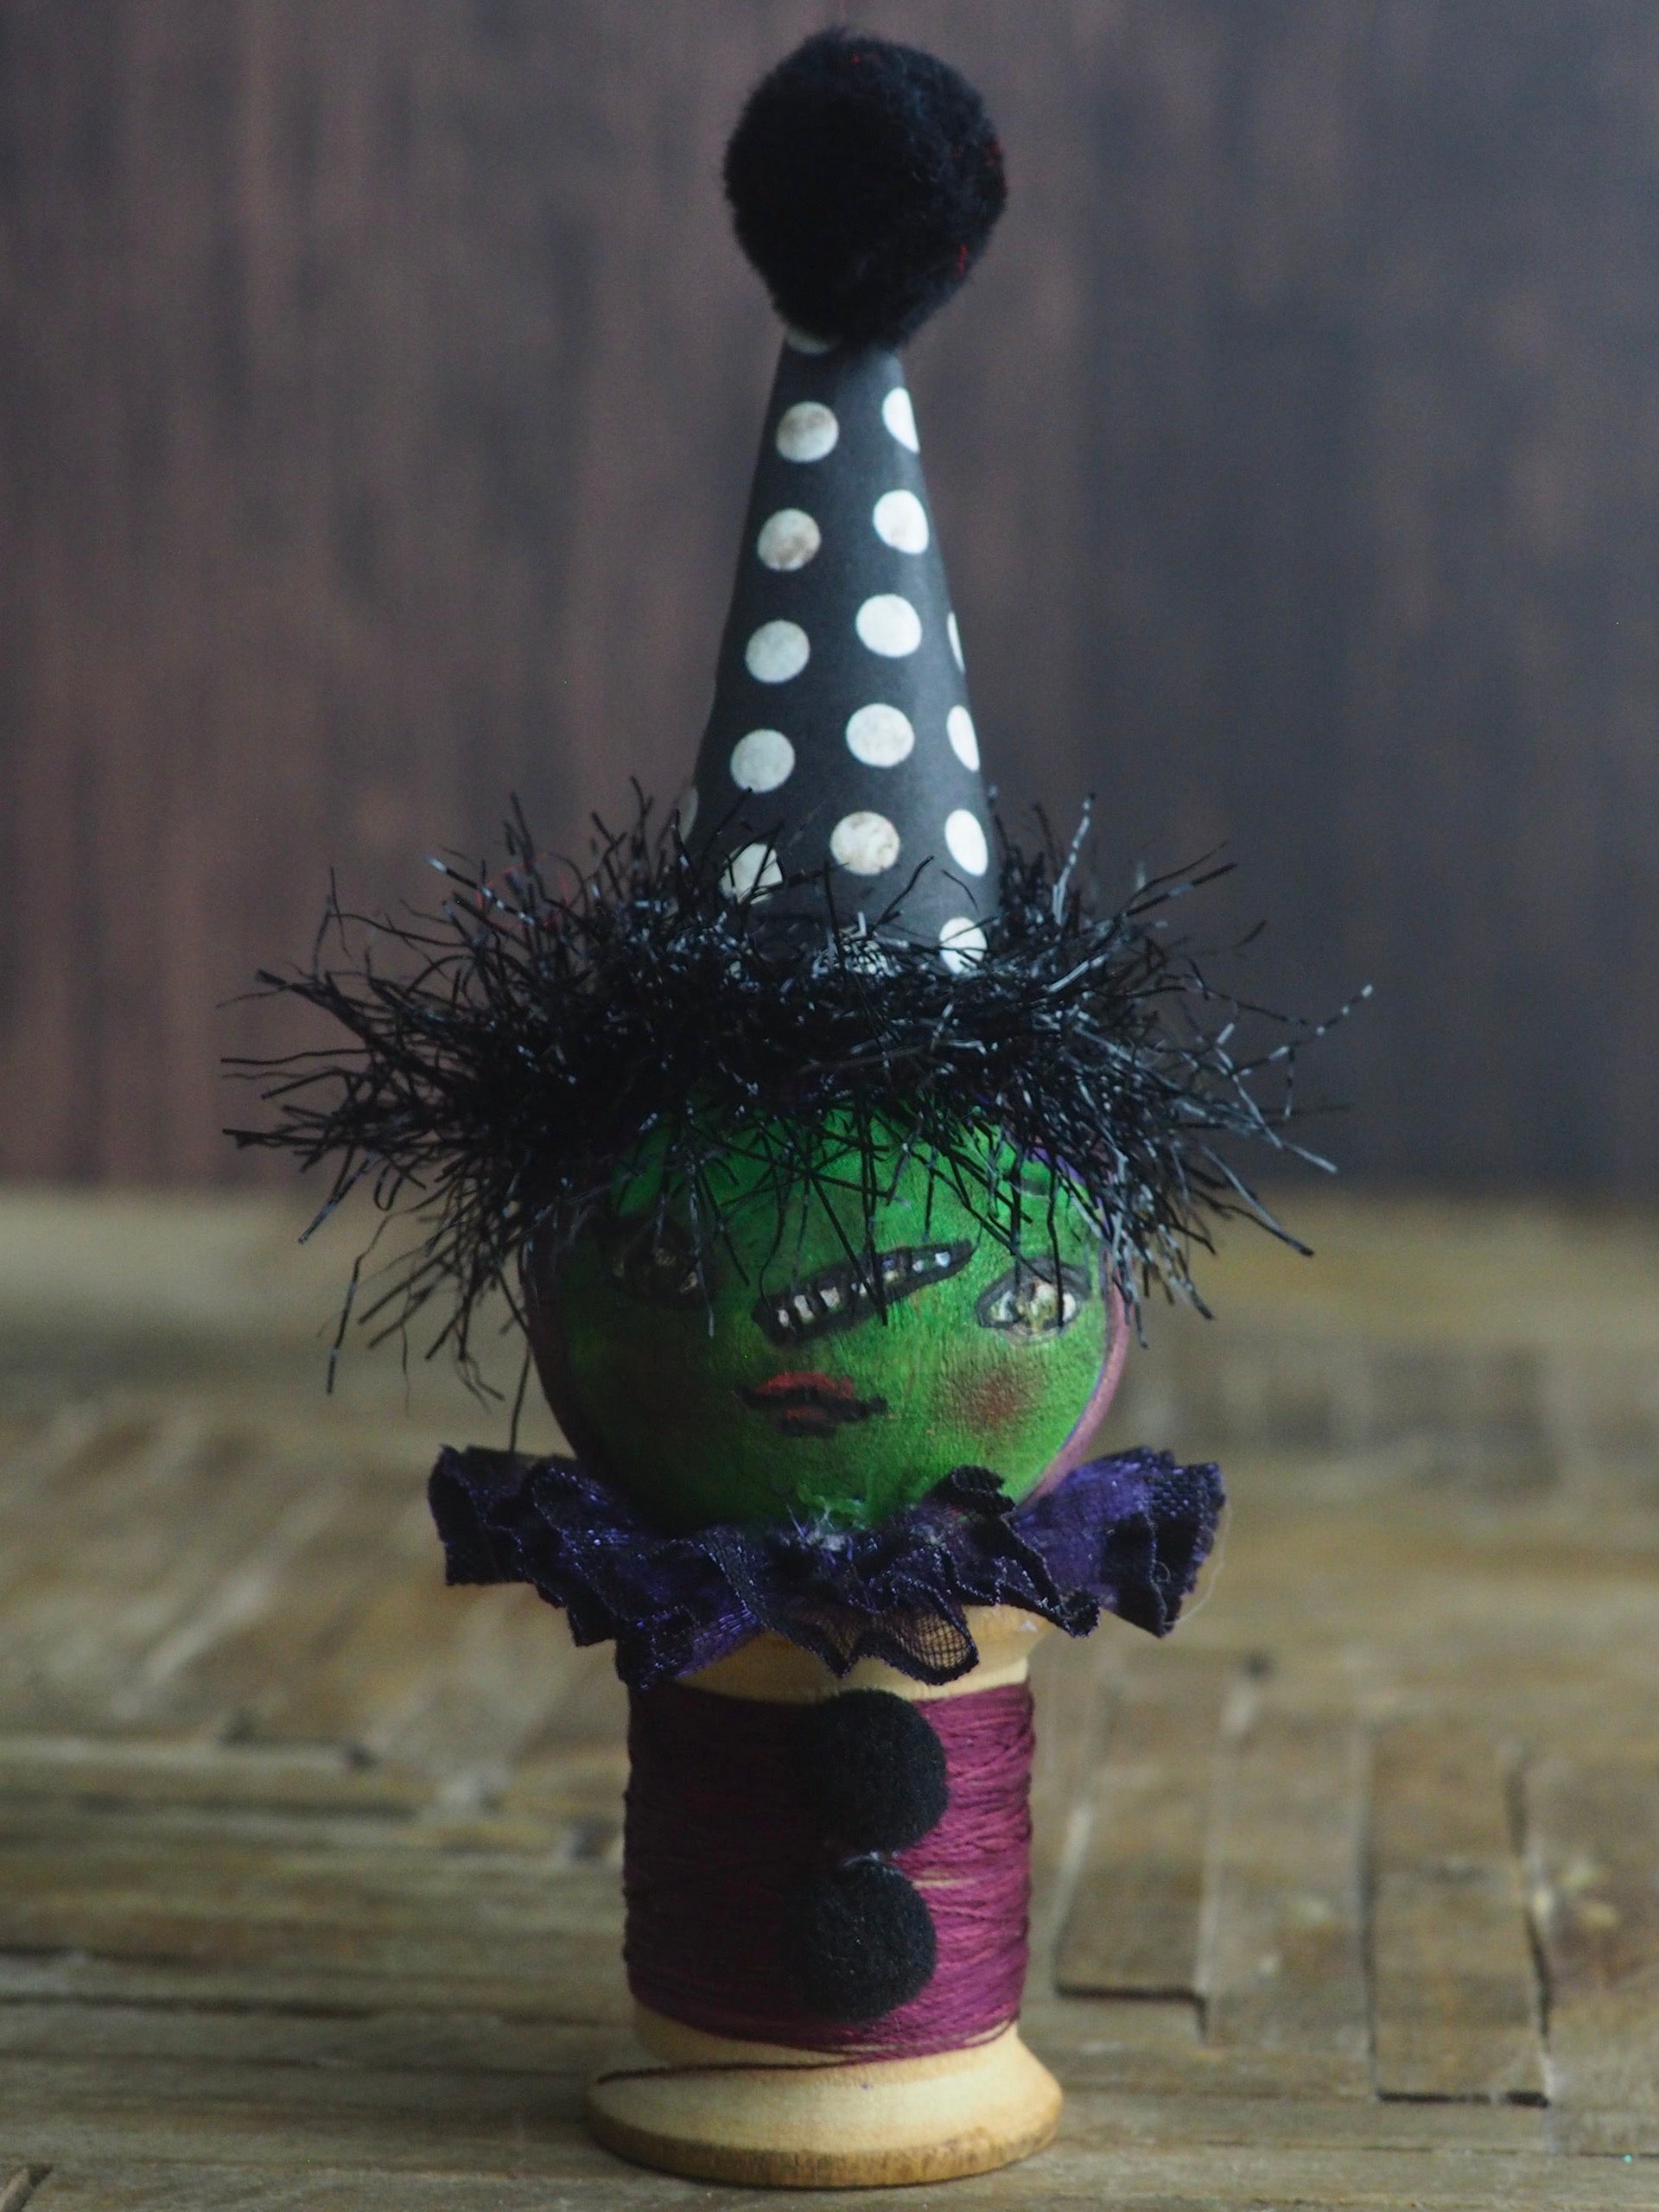 Danita clown wicked witch evil vintage Halloween folk art original art doll kokeshi wooden spool thread figurine home decor decoration